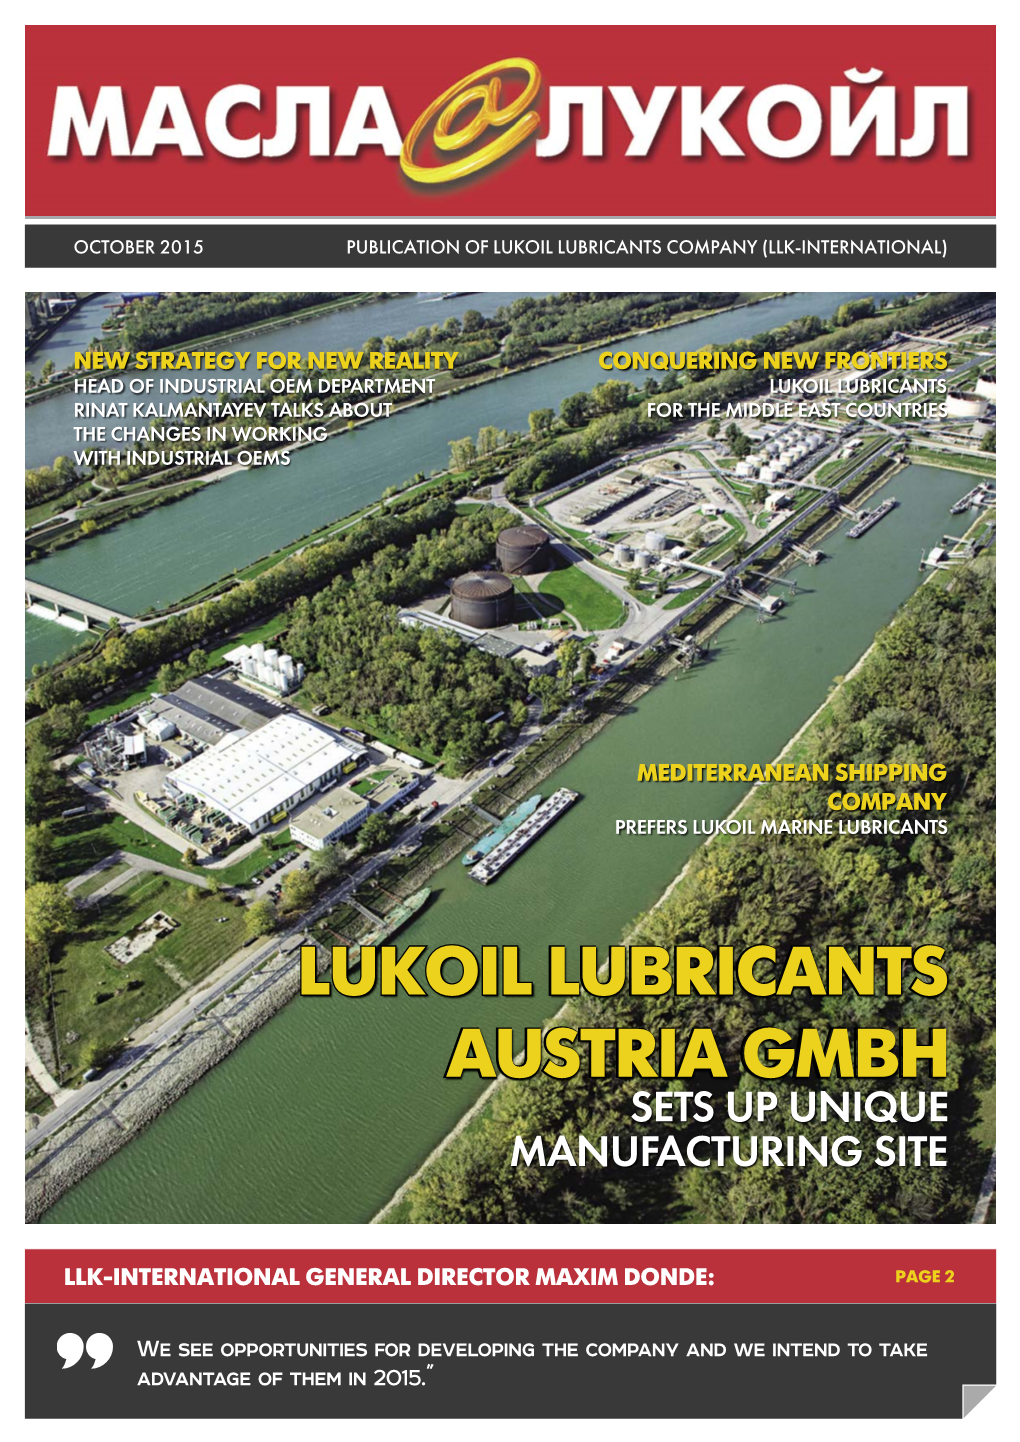 Lukoil Lubricants Austria Gmbh Sets up Unique Manufacturing Site